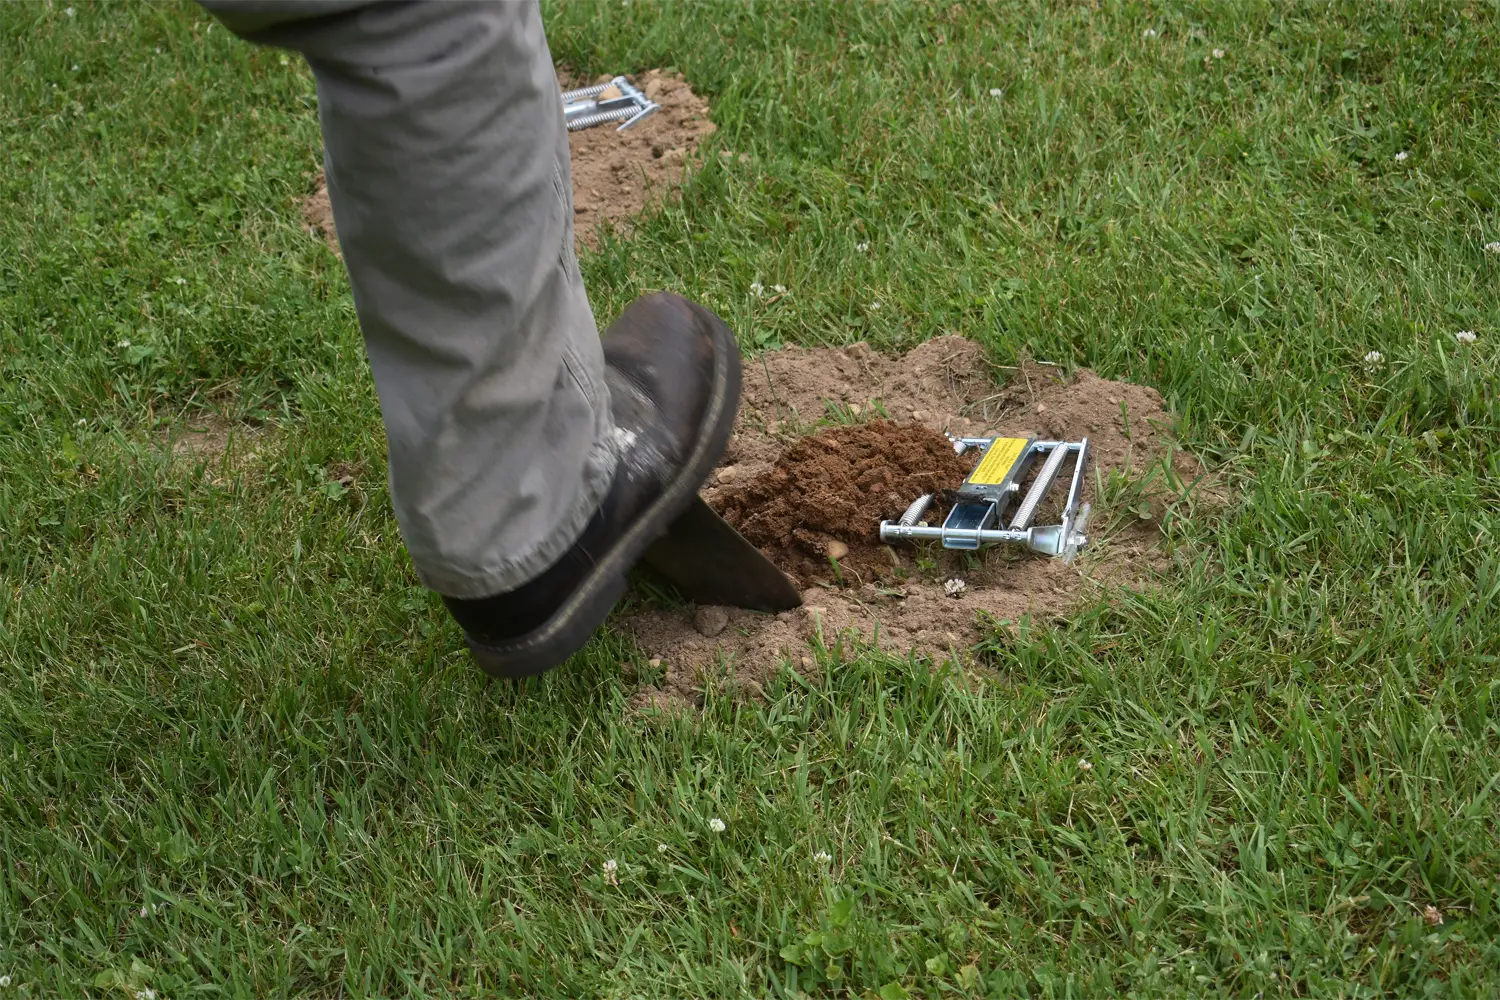 Moles digging up your yard?